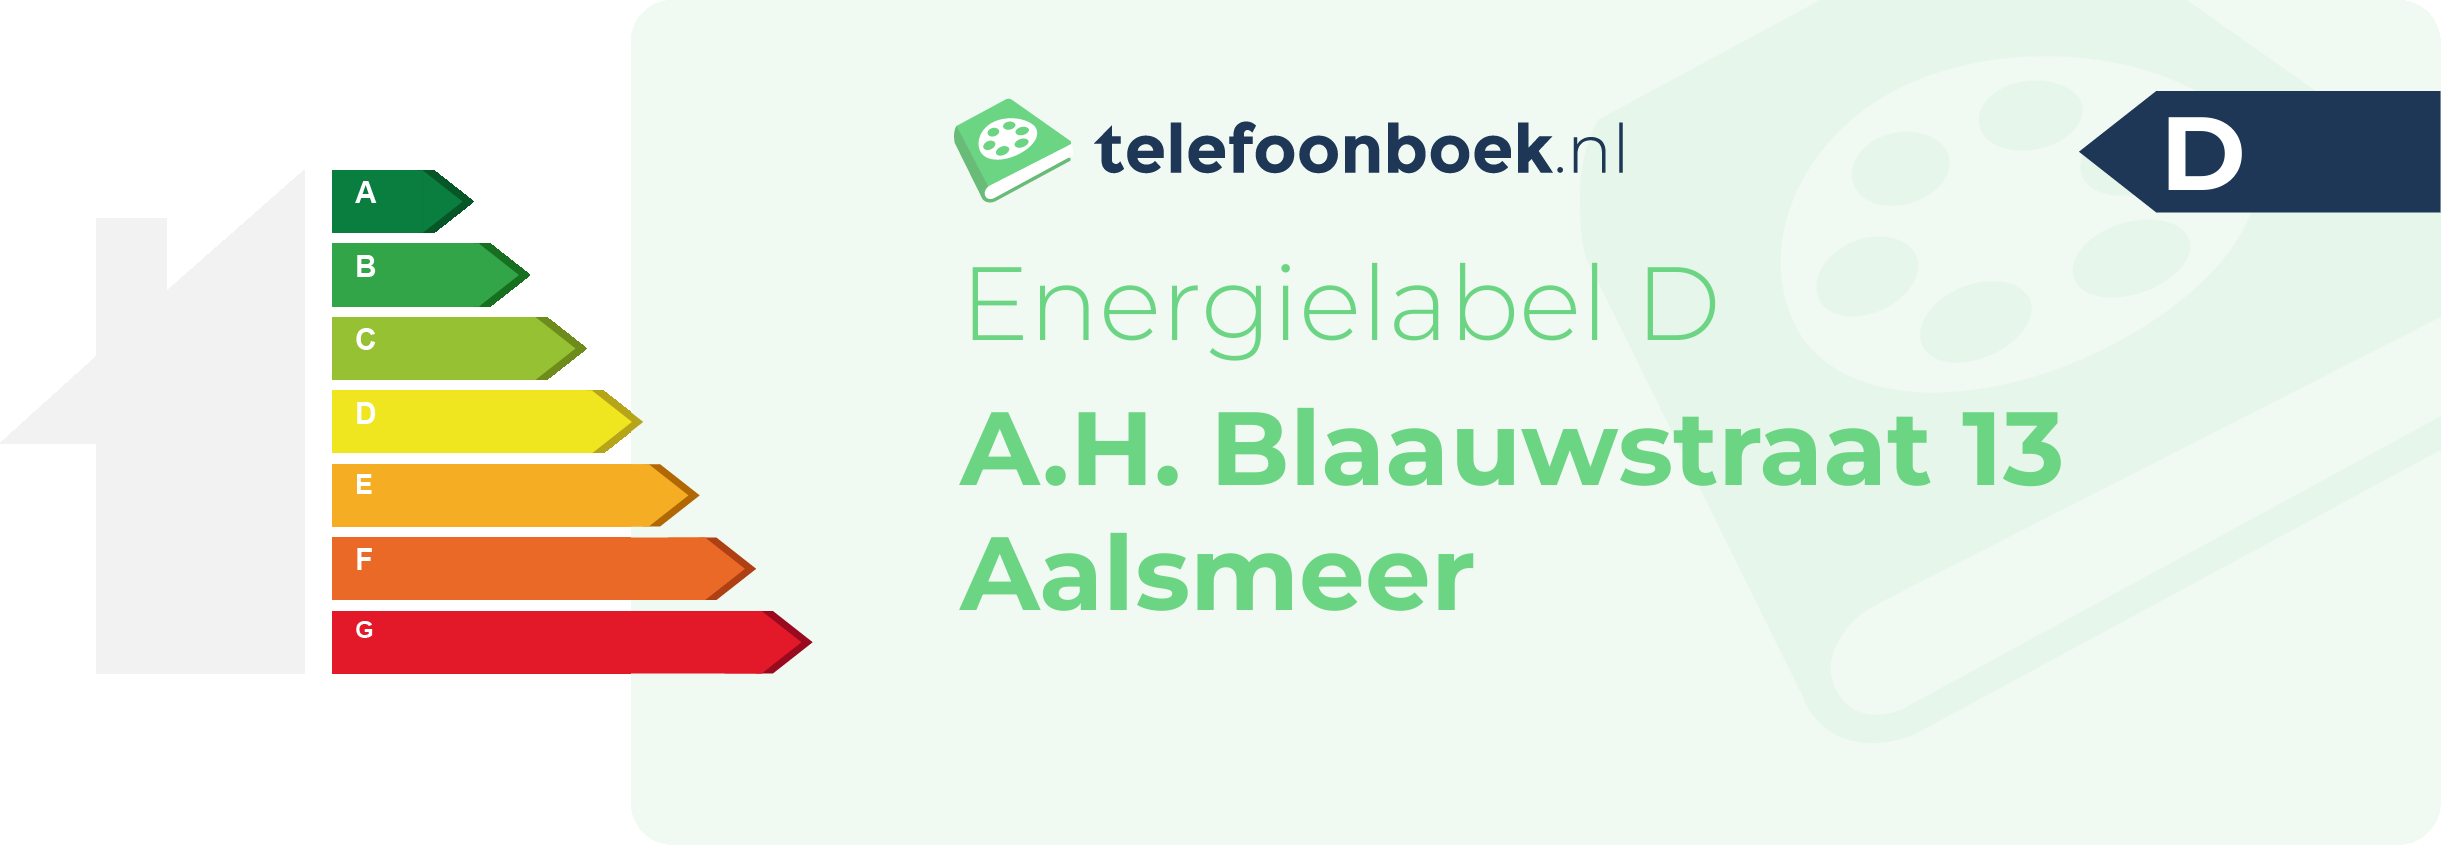 Energielabel A.H. Blaauwstraat 13 Aalsmeer